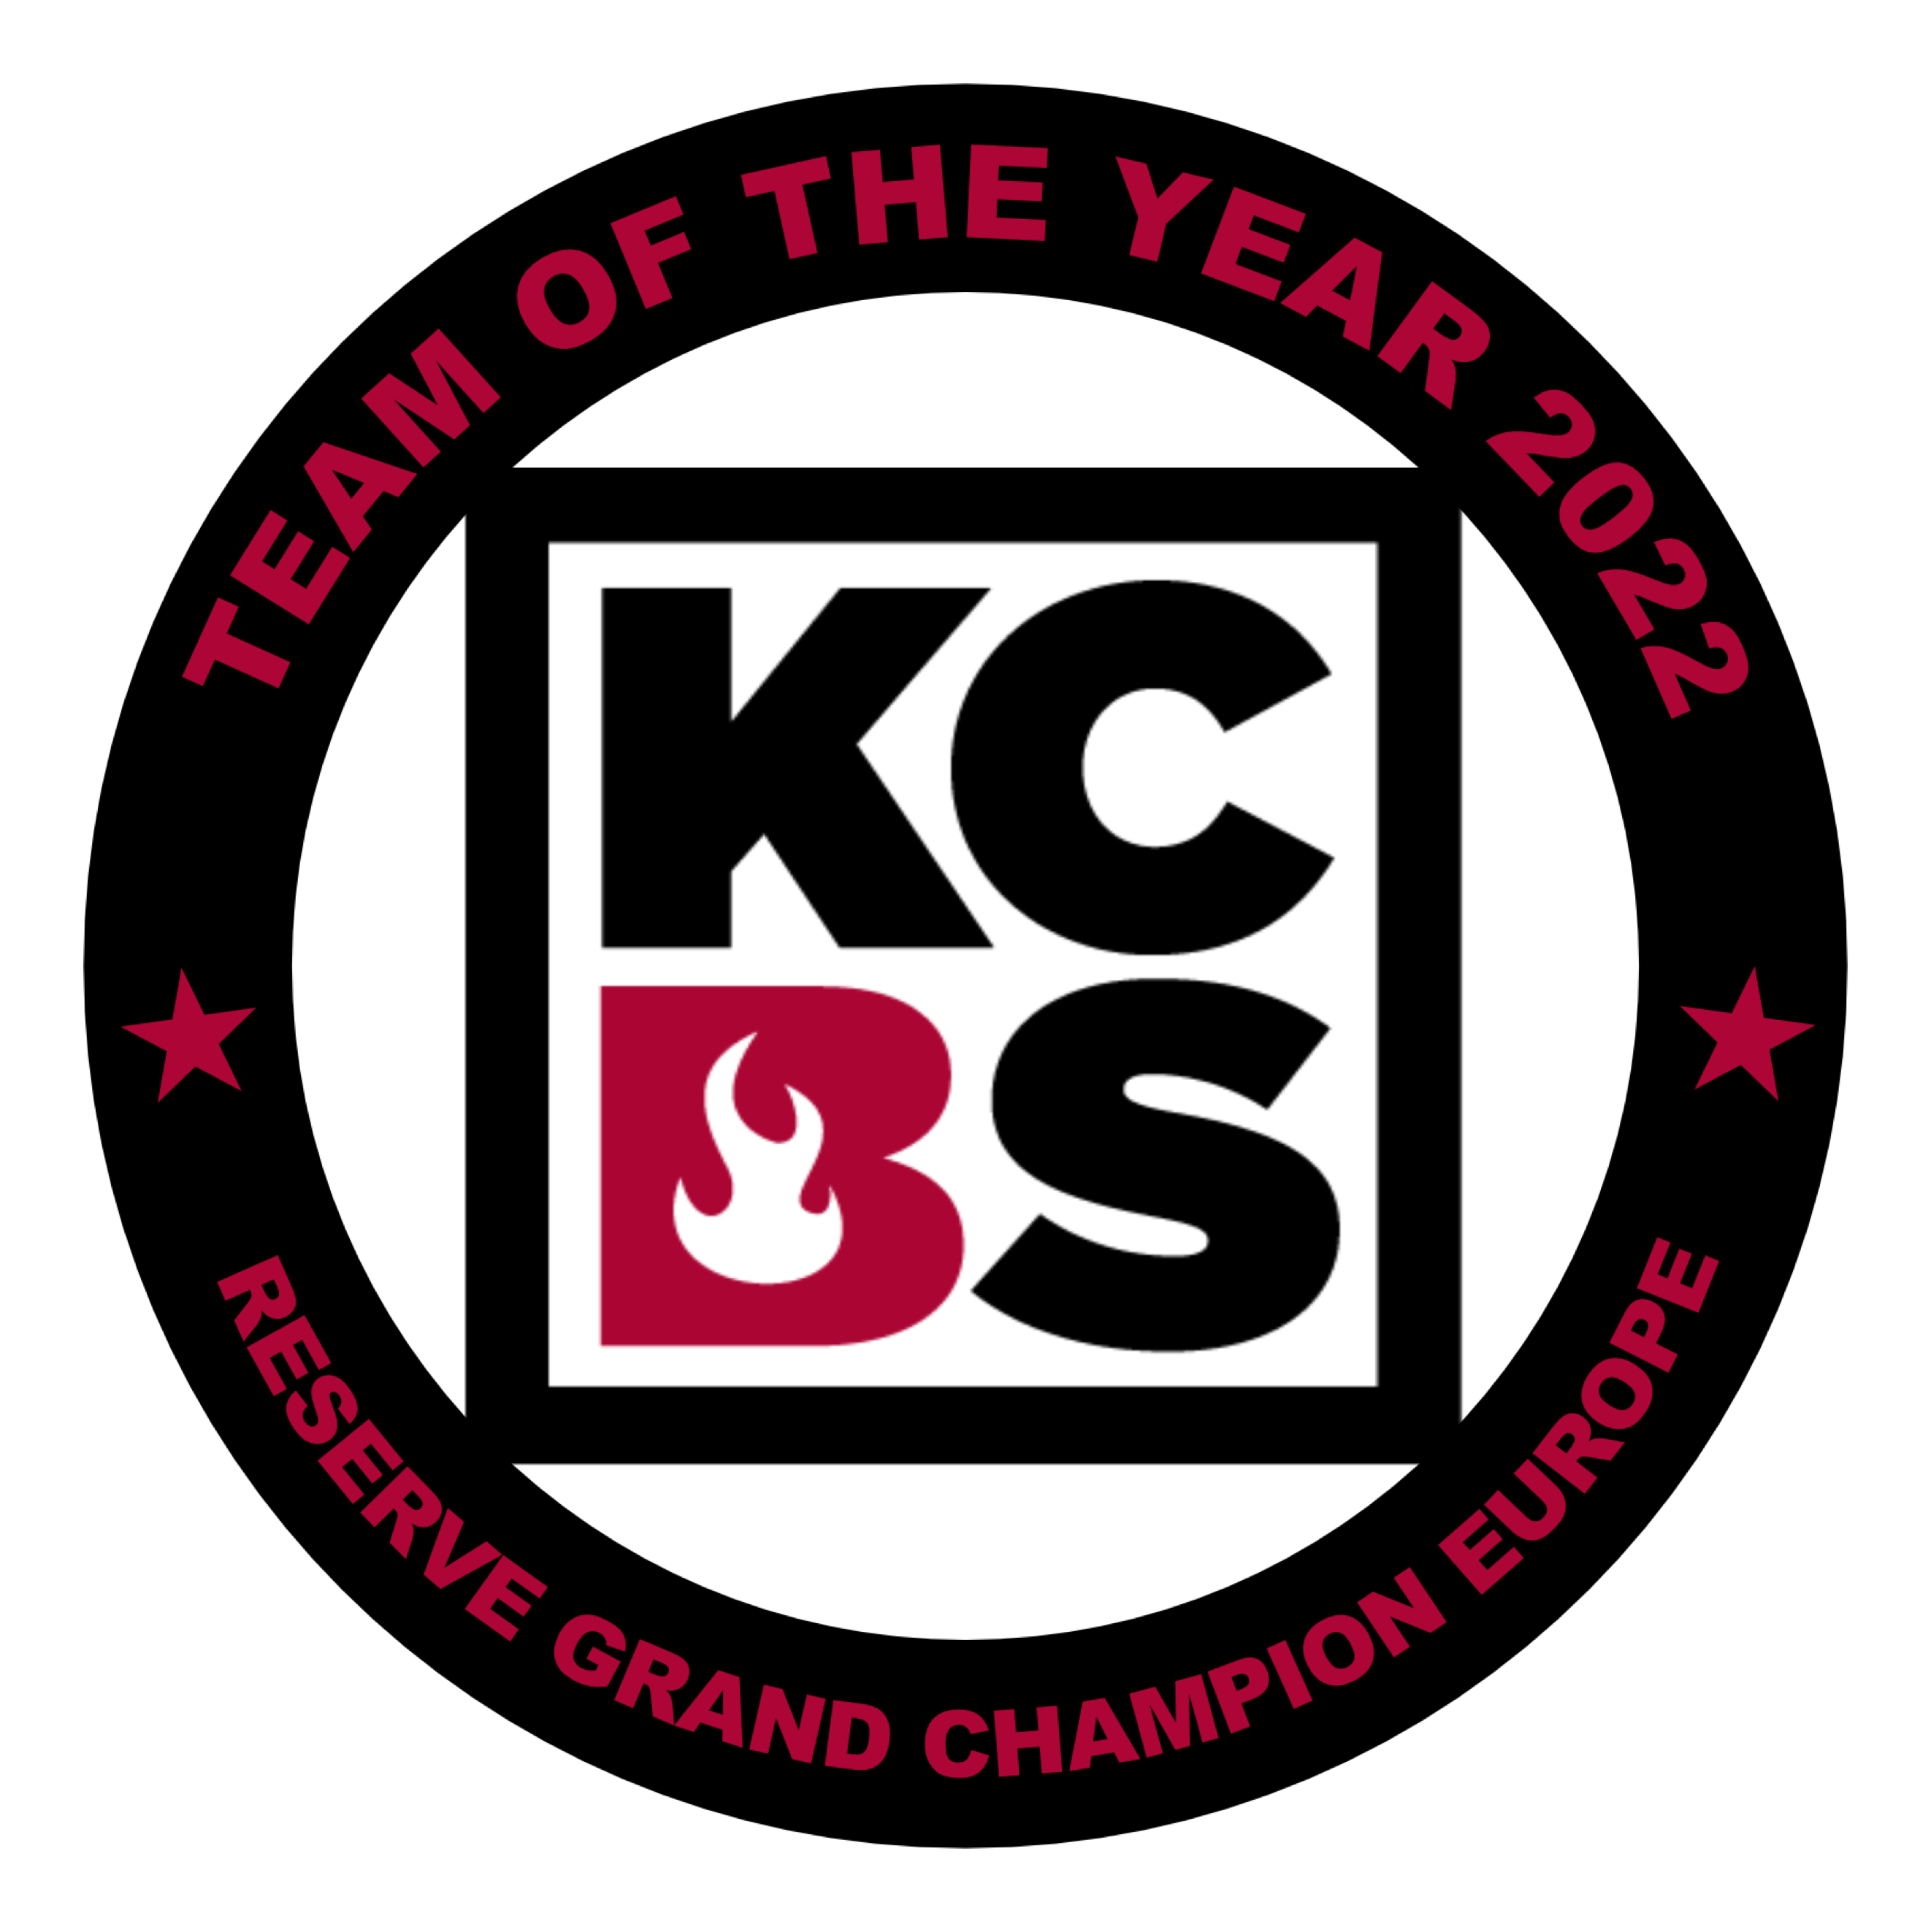 KCBS Team of the Year 2022, KCBS, Team of the Year Europe, Reverse Grand Champion, 